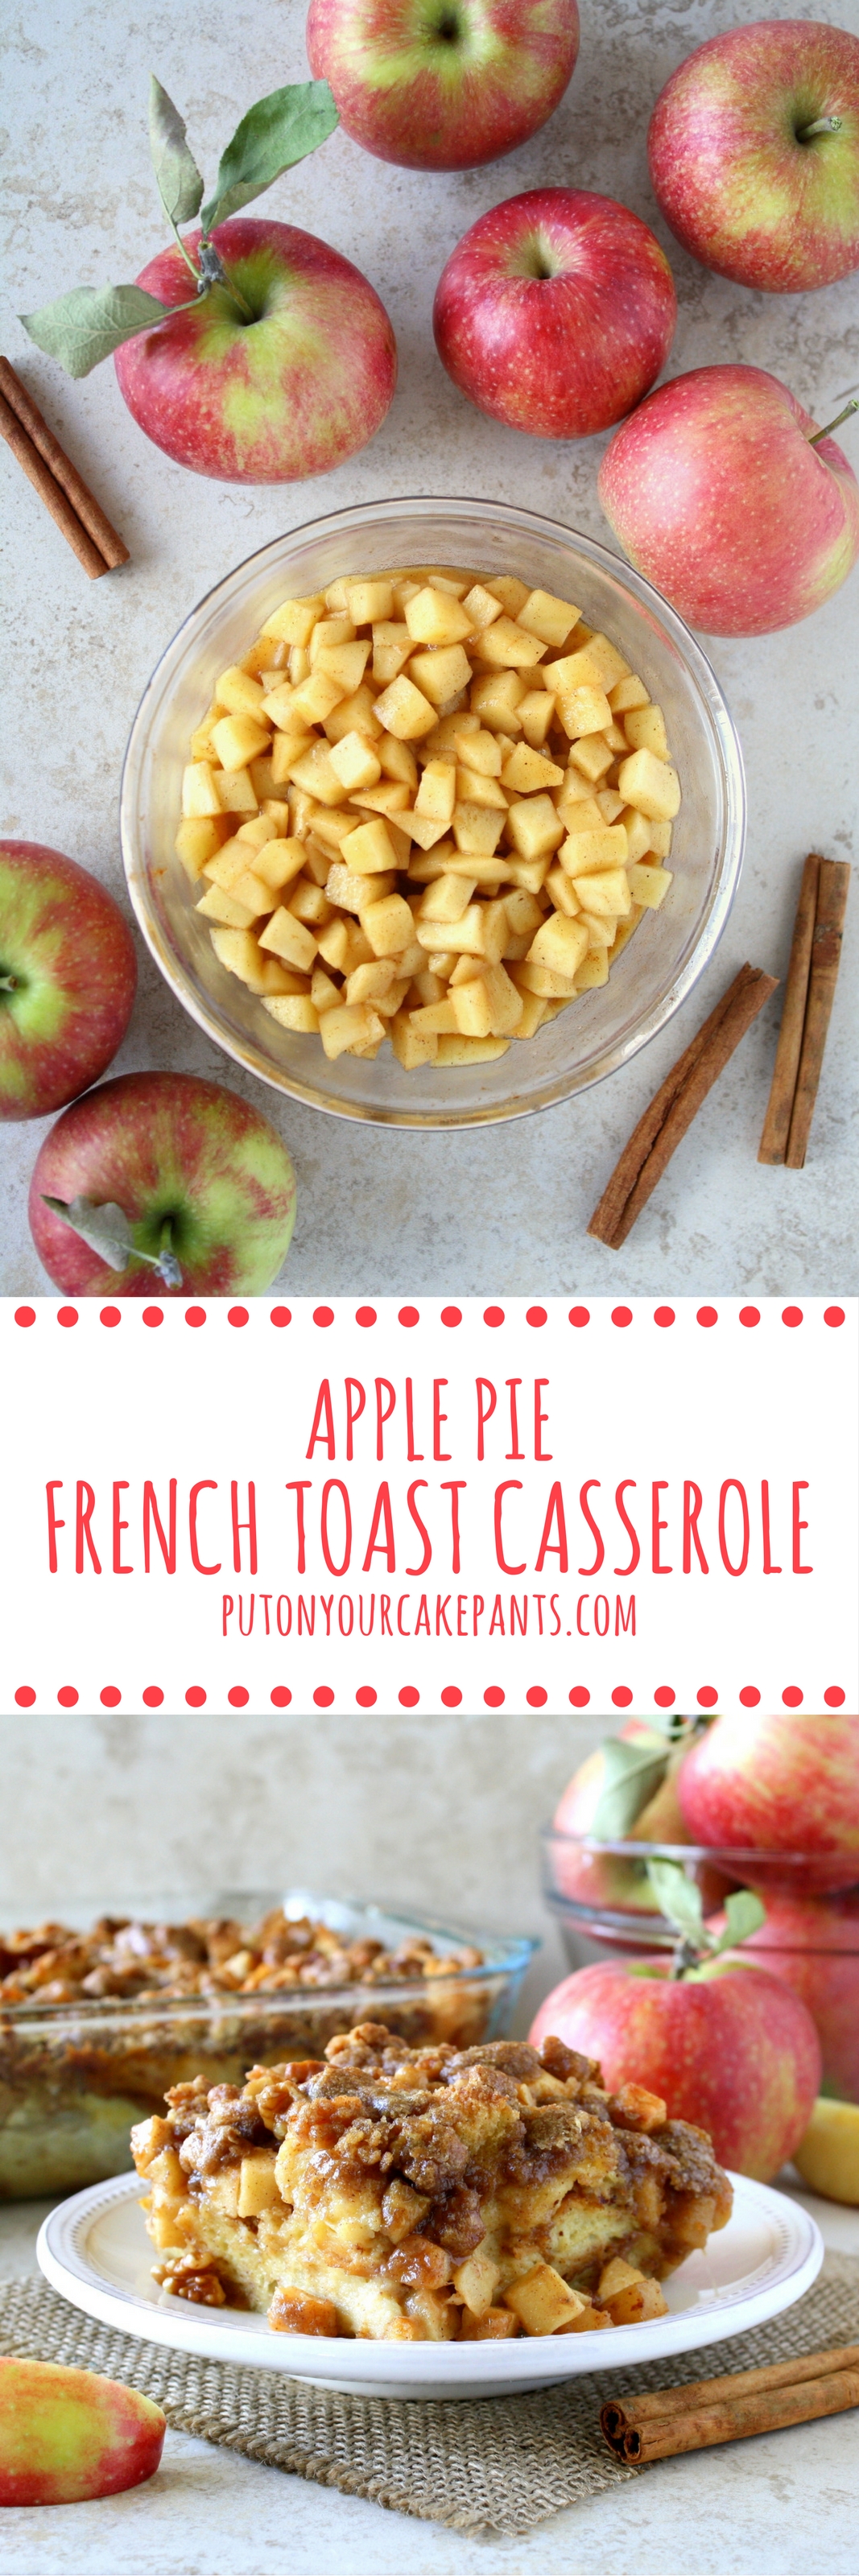 apple pie French toast casserole